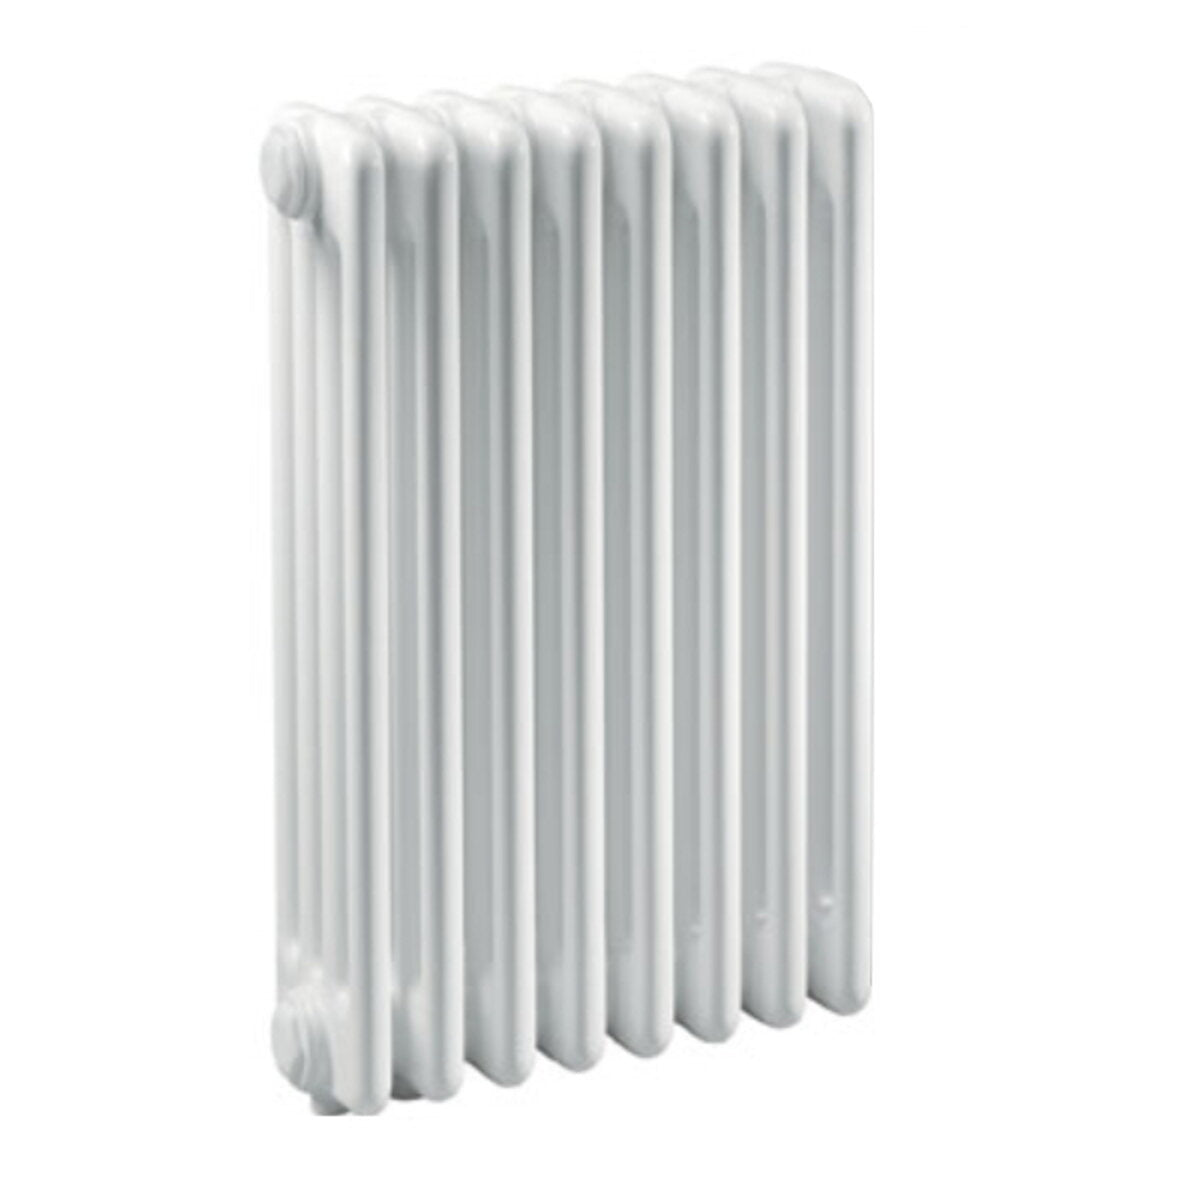 Ercos Comby steel column radiator 8 elements 3 columns center distance 800 mm